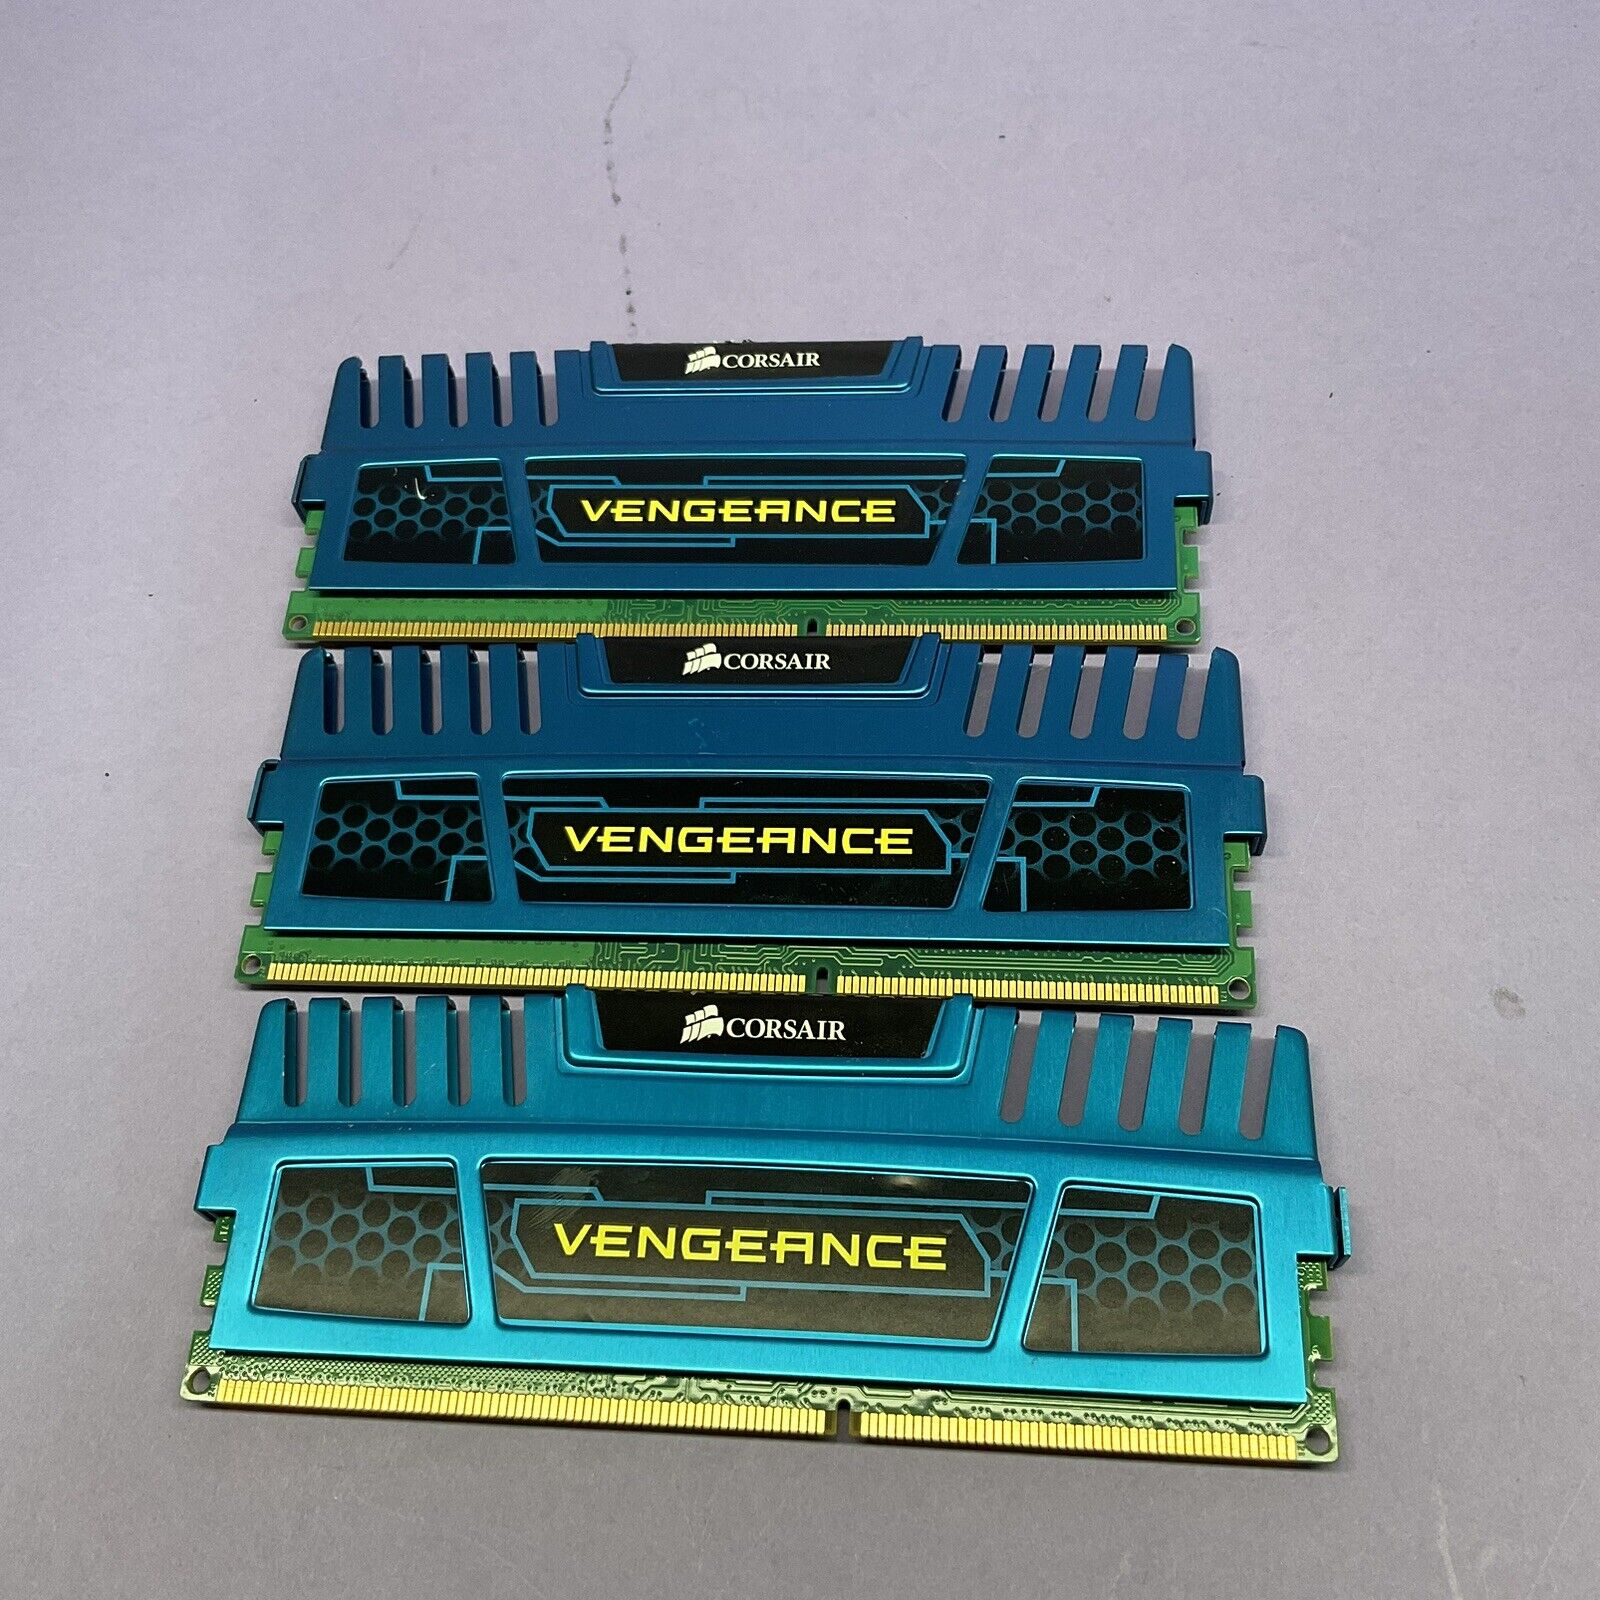 Corsair Vengeance lot of 3 8GB DDR3 RAM 1866MHz (CMZ8GX3M2A1866C9B)